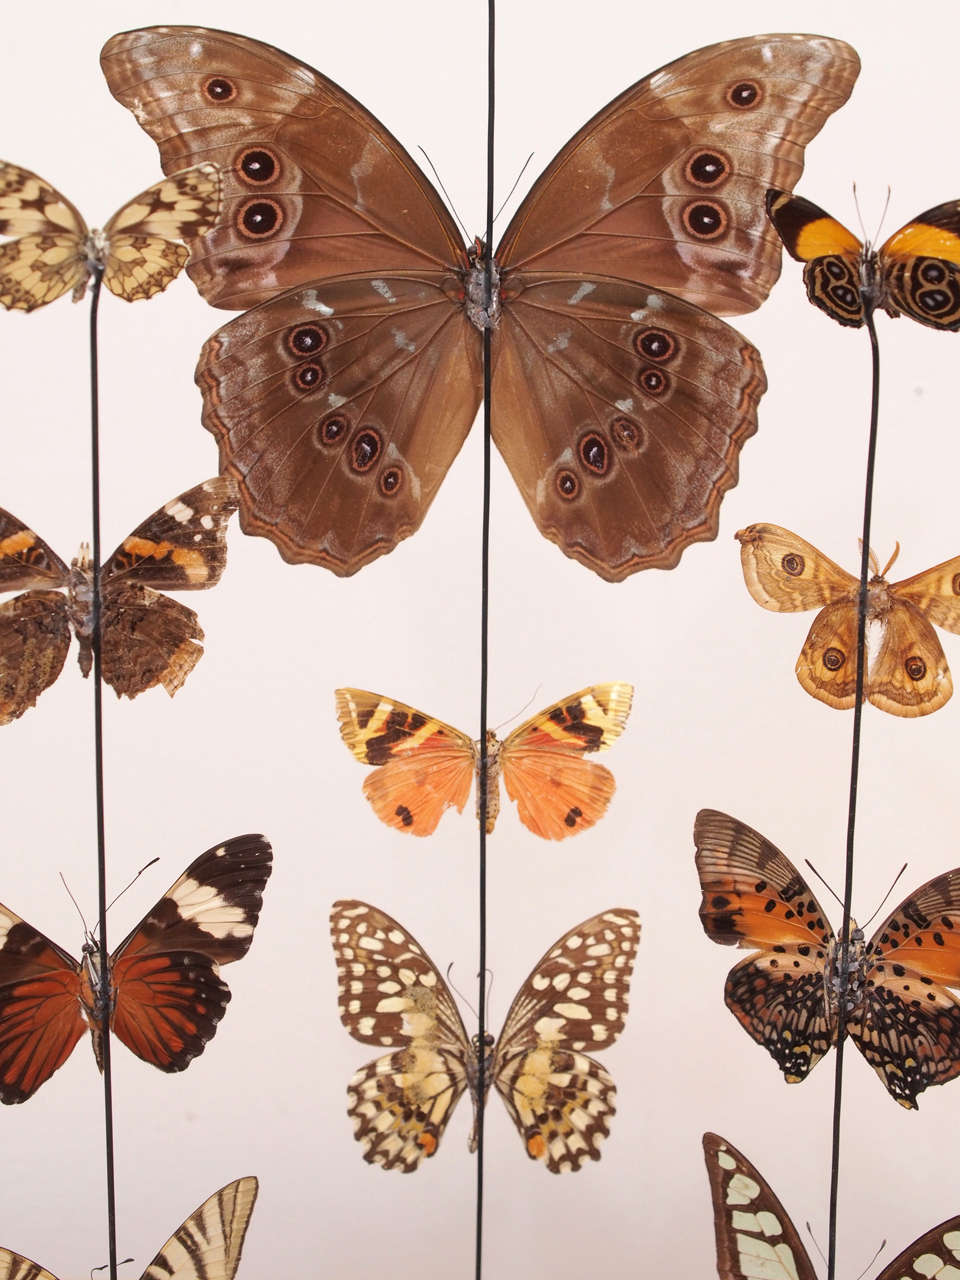 Specimen Butterflies Under Glass Dome 3